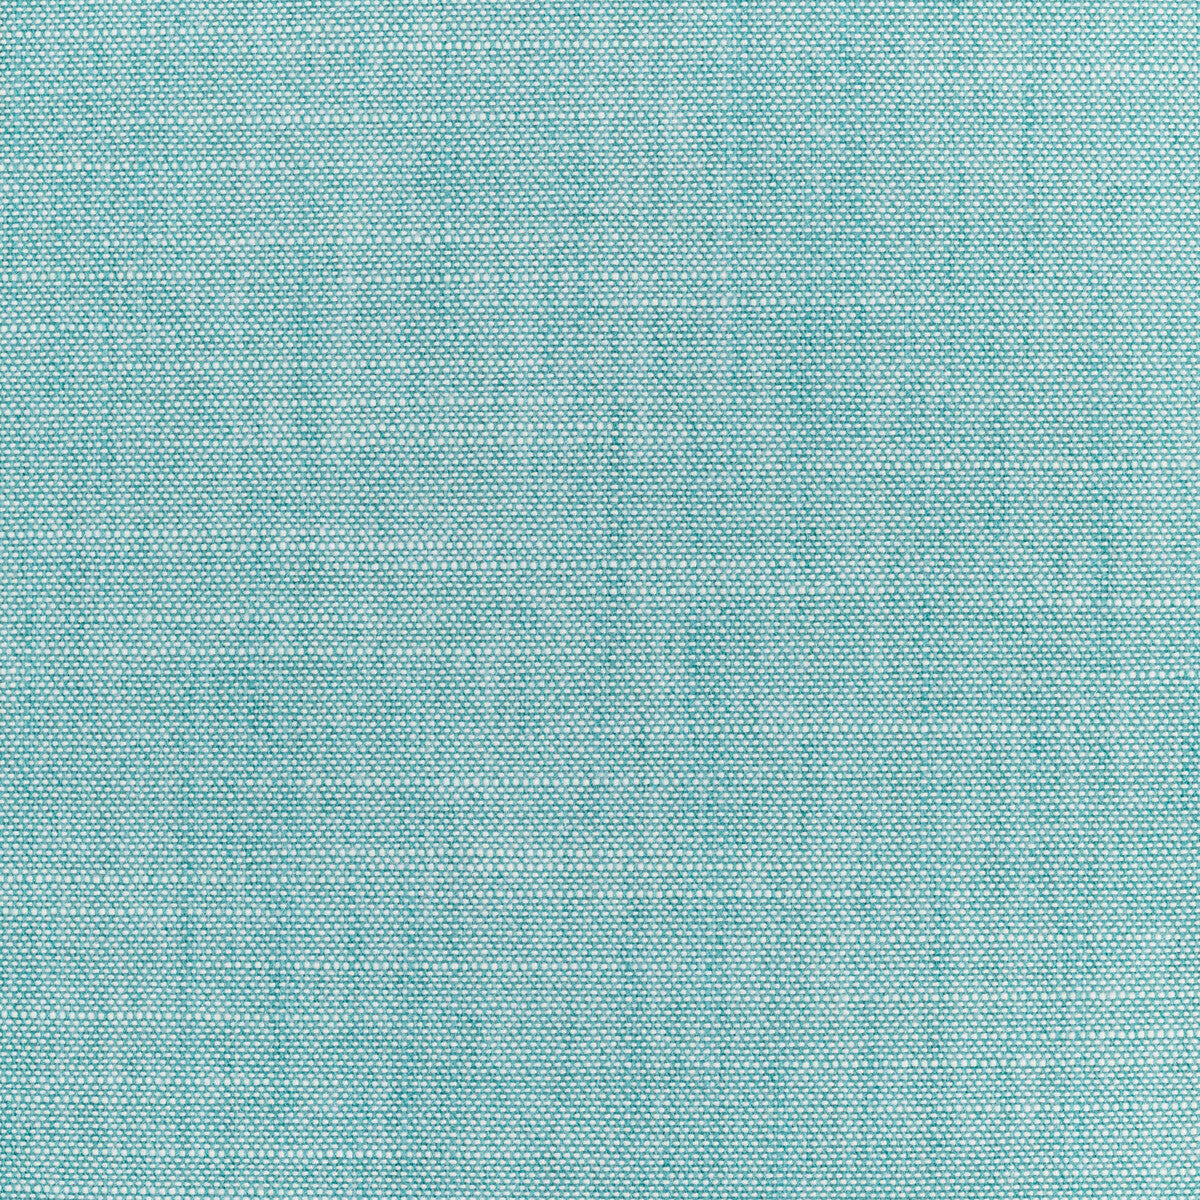 Kravet Smart fabric in 36112-113 color - pattern 36112.113.0 - by Kravet Smart in the Performance Kravetarmor collection